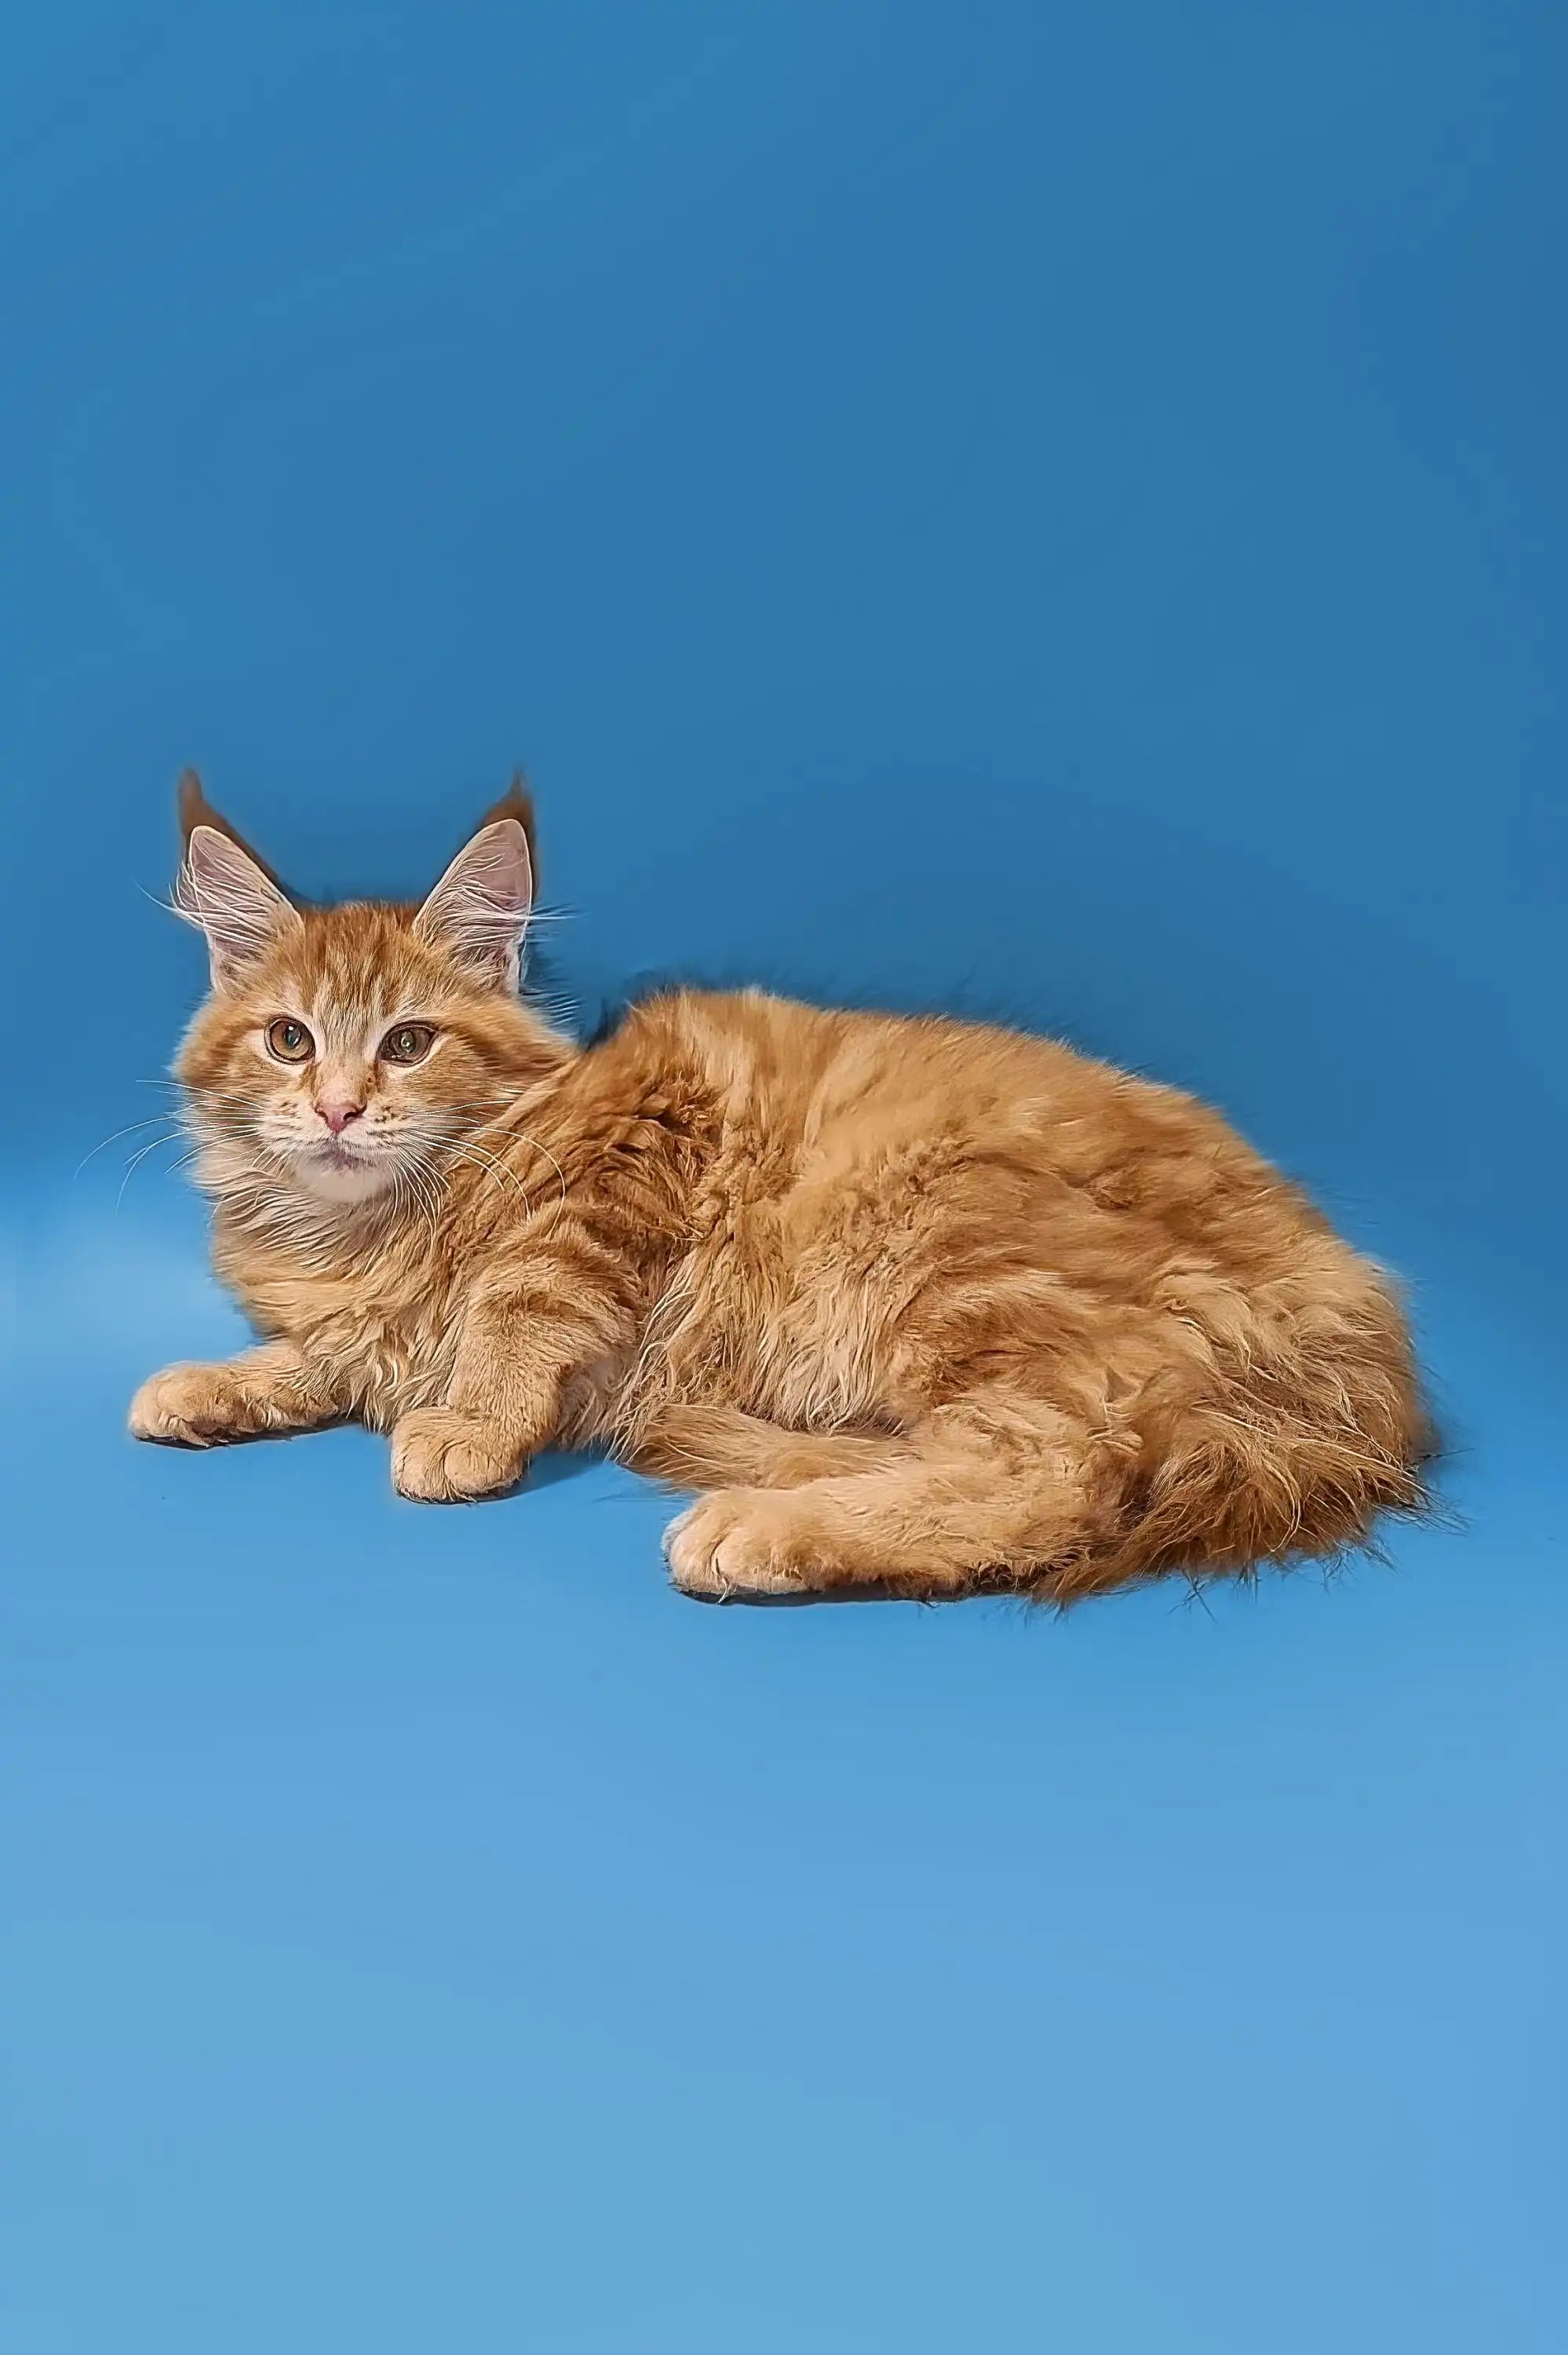 Maine Coon Kittens for Sale Pablo | Kitten